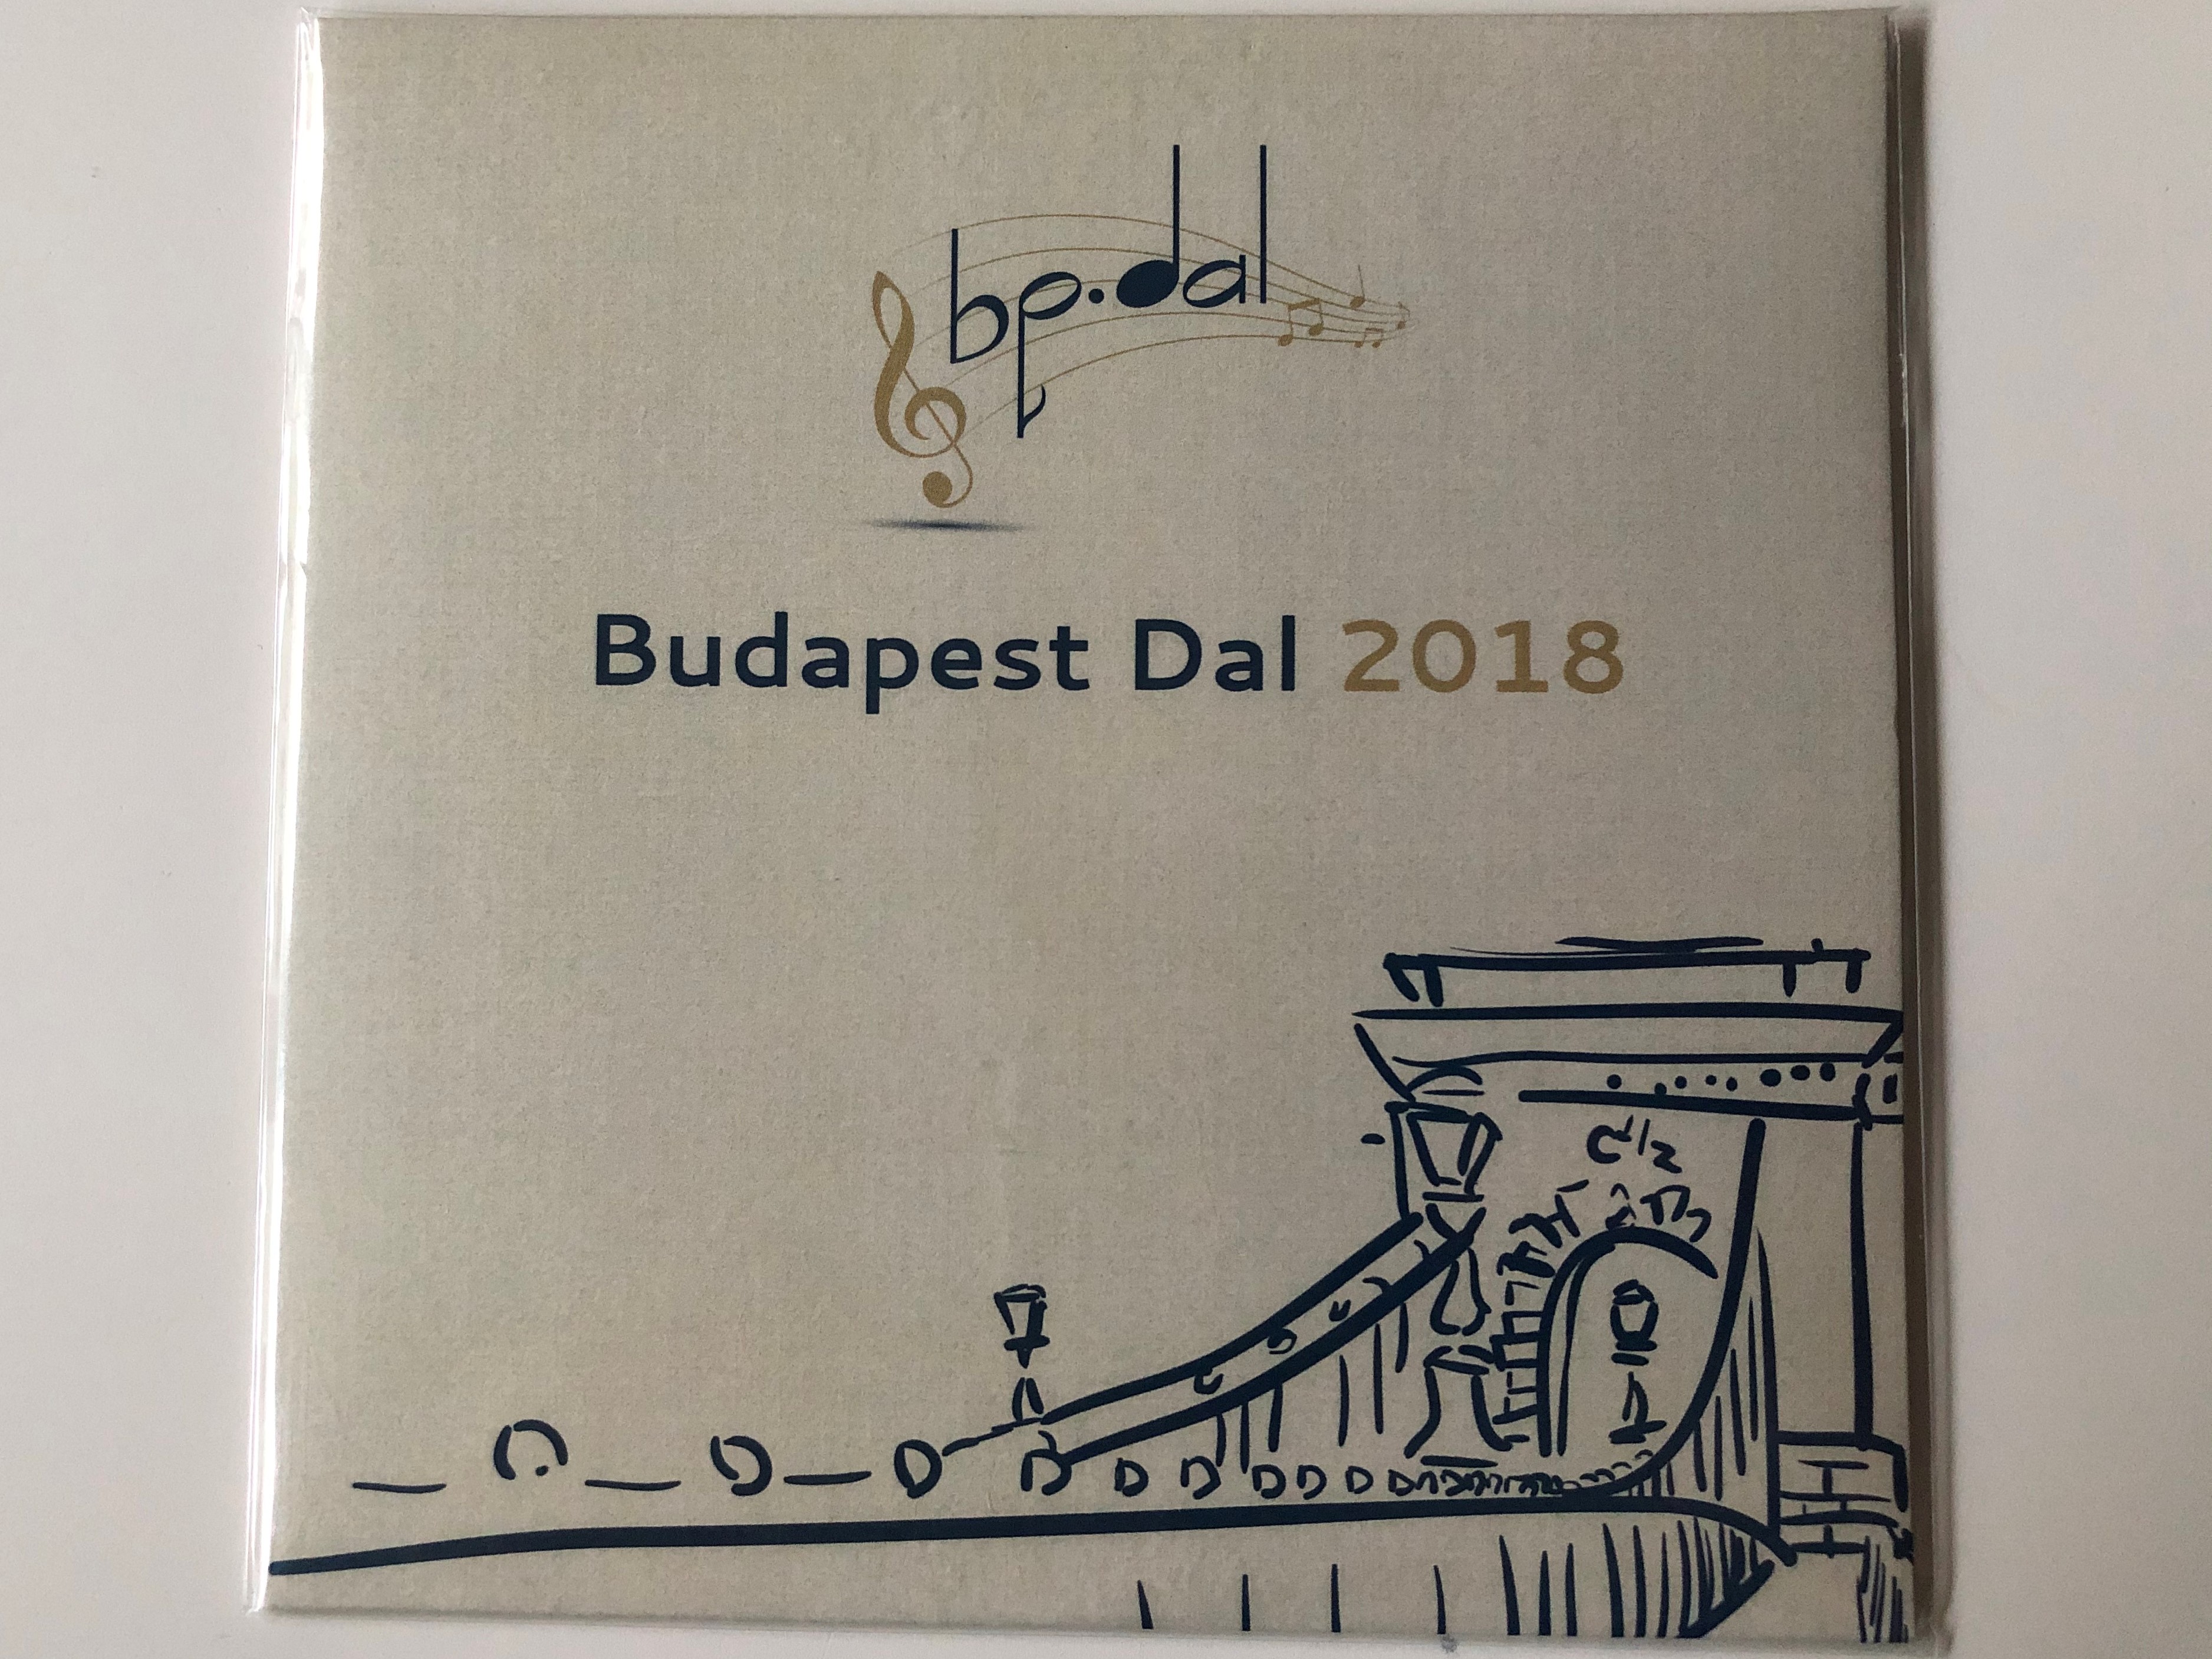 budapest-dal-2018-magneoton-audio-cd-2018-5999860032229-1-.jpg